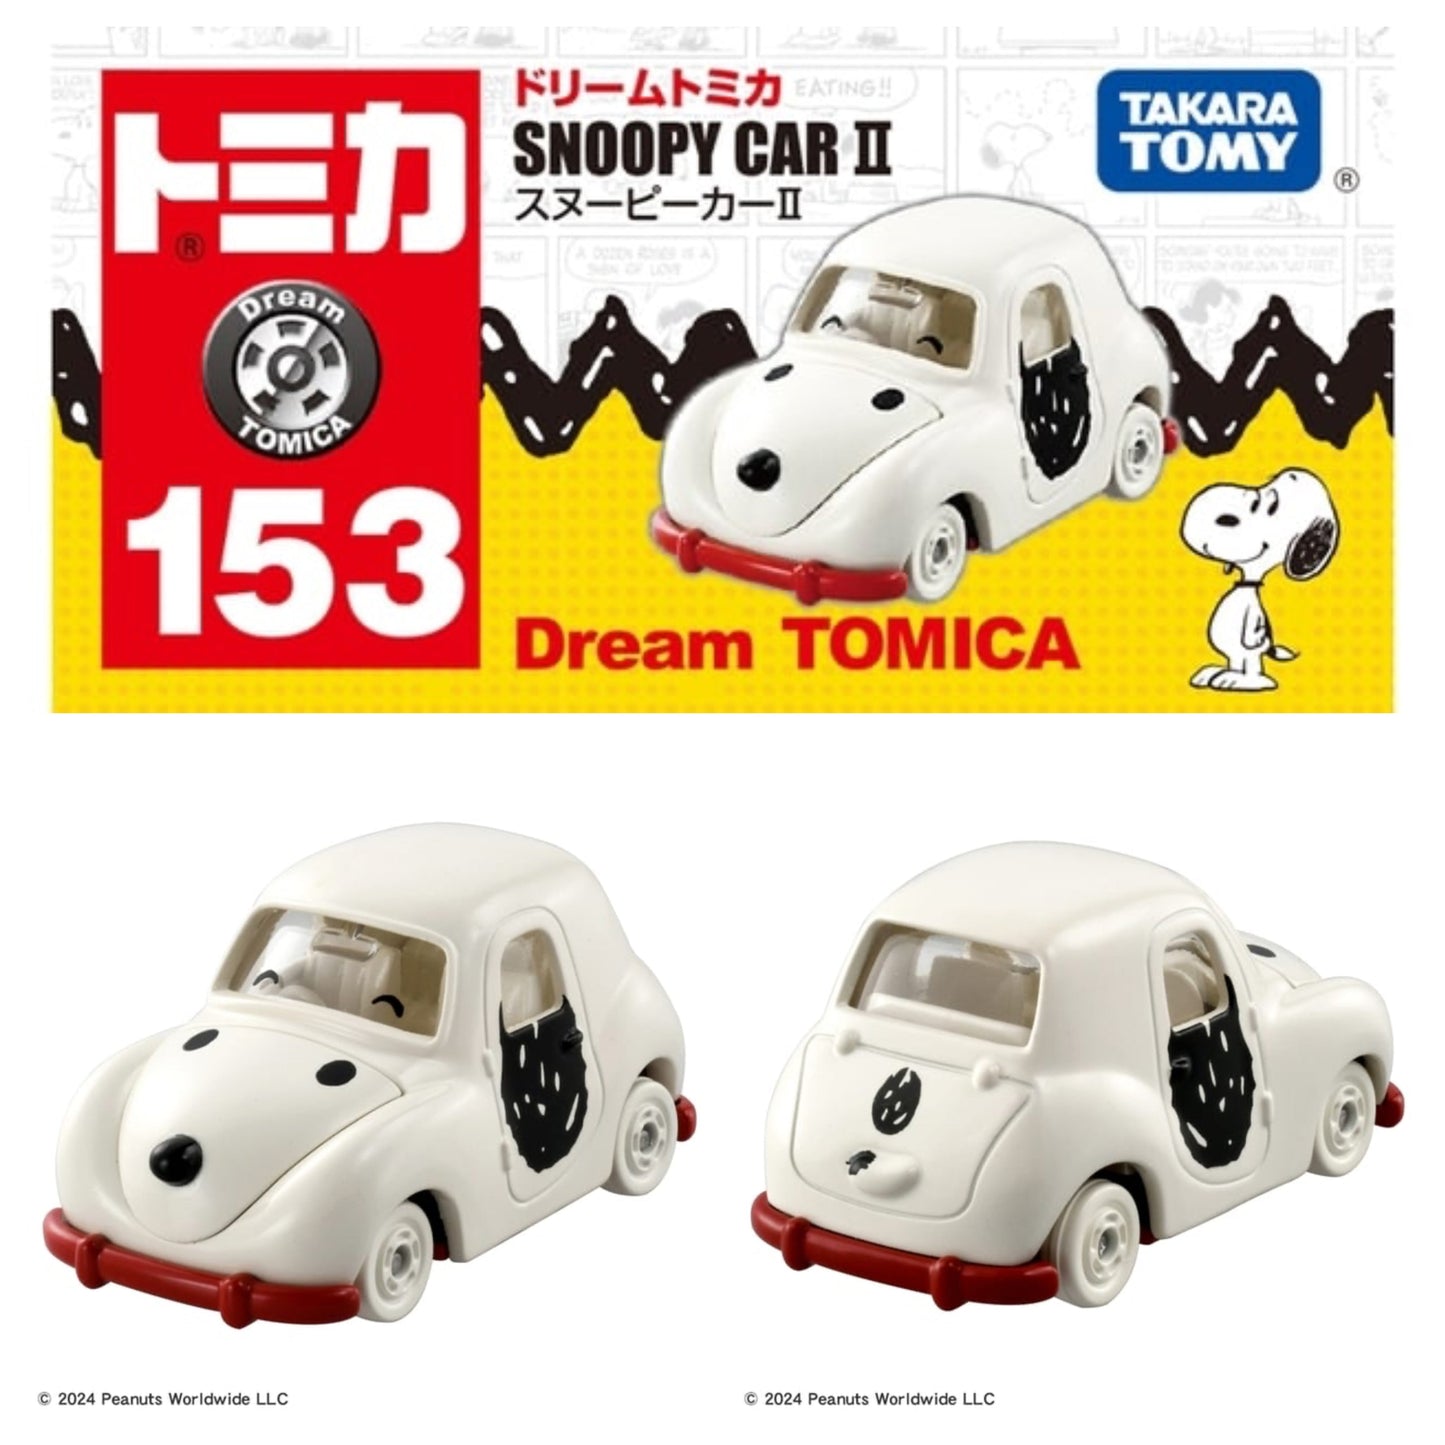 Snoopy Dream Tomica 車仔 Snoopy Car II 